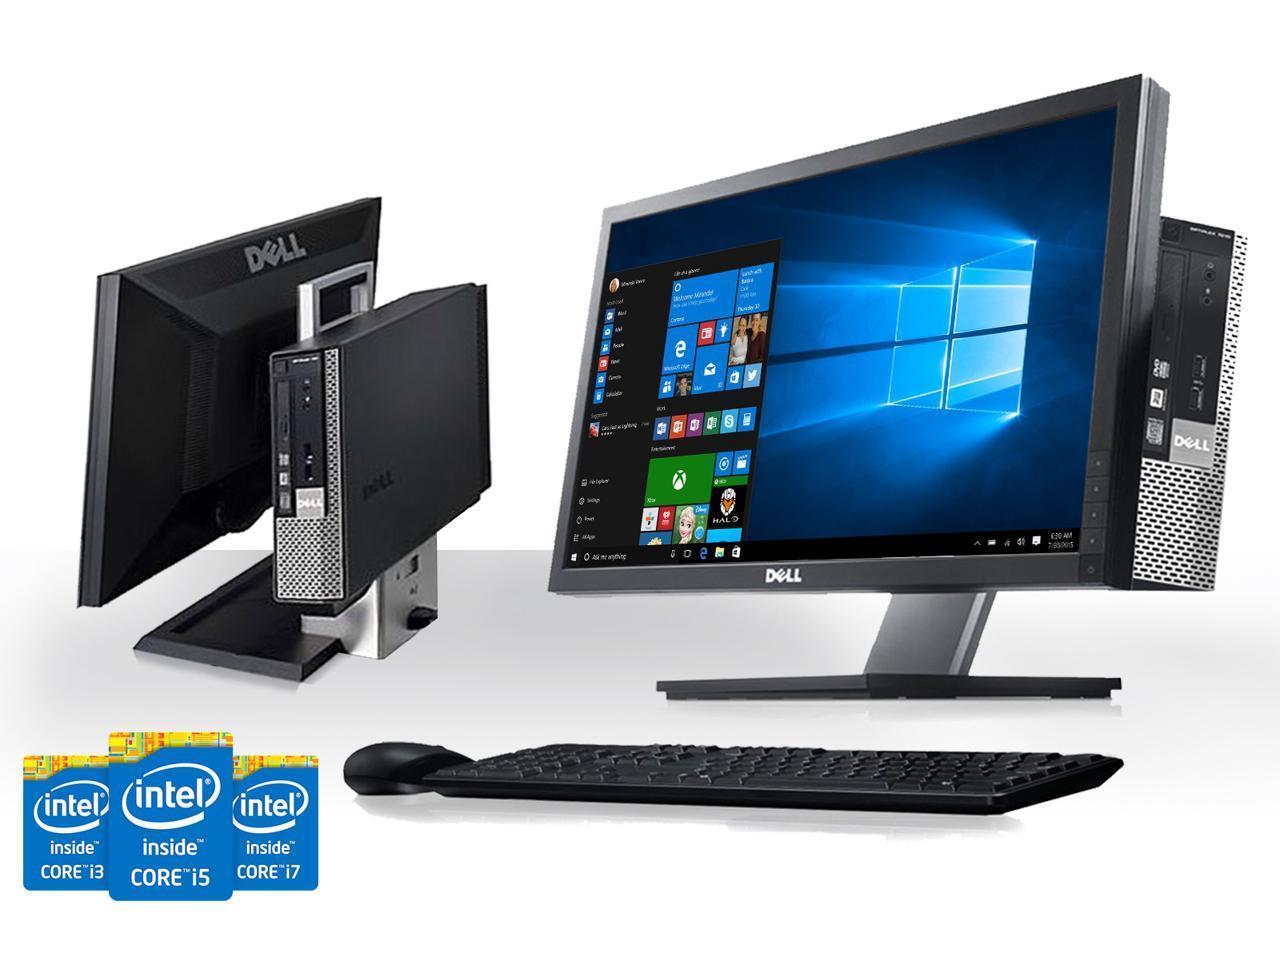 Refurbished Dell Optiplex 7010 Sff All In One With Dell 22 19 X 1080 Monitor Desktop Pc Intel Core I5 3470 3 2ghz 16gb Ram 1tb Hd Dvd Rw Wifi Windows 10 Pro Newegg Com